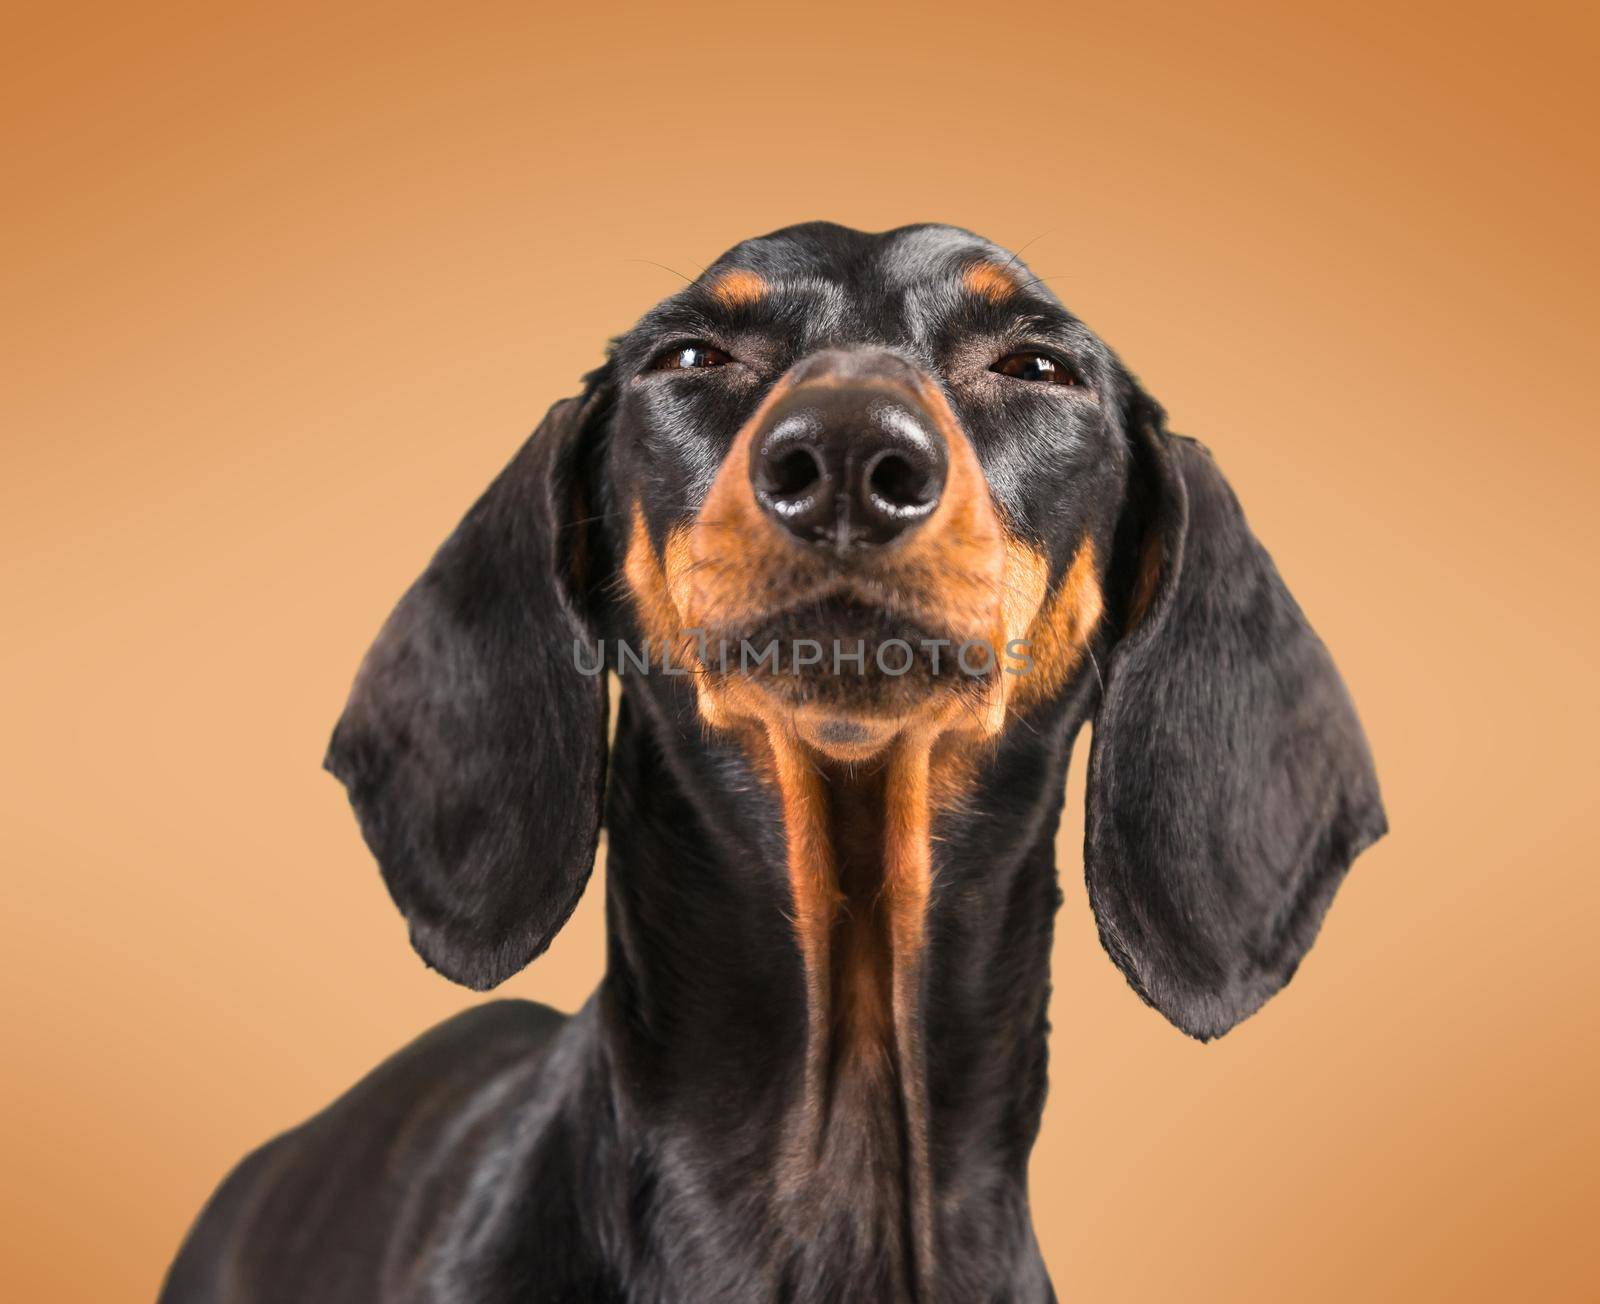 Cute dachshund dog on a brown background